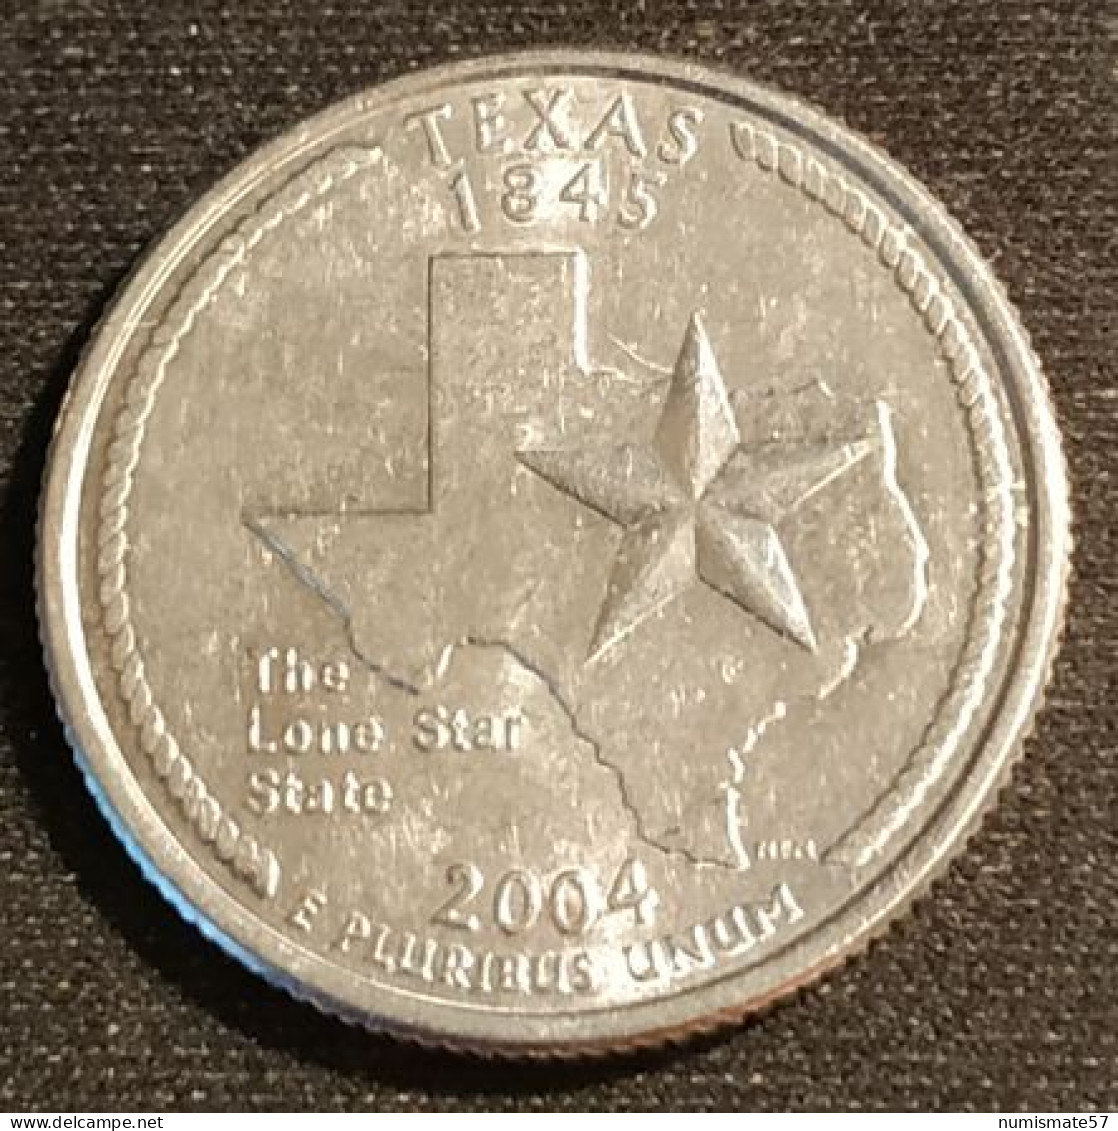 ETATS UNIS - USA - ¼ - 1/4 DOLLAR 2004 P - Texas - KM 357 - Quarter Dollar - 1999-2009: State Quarters